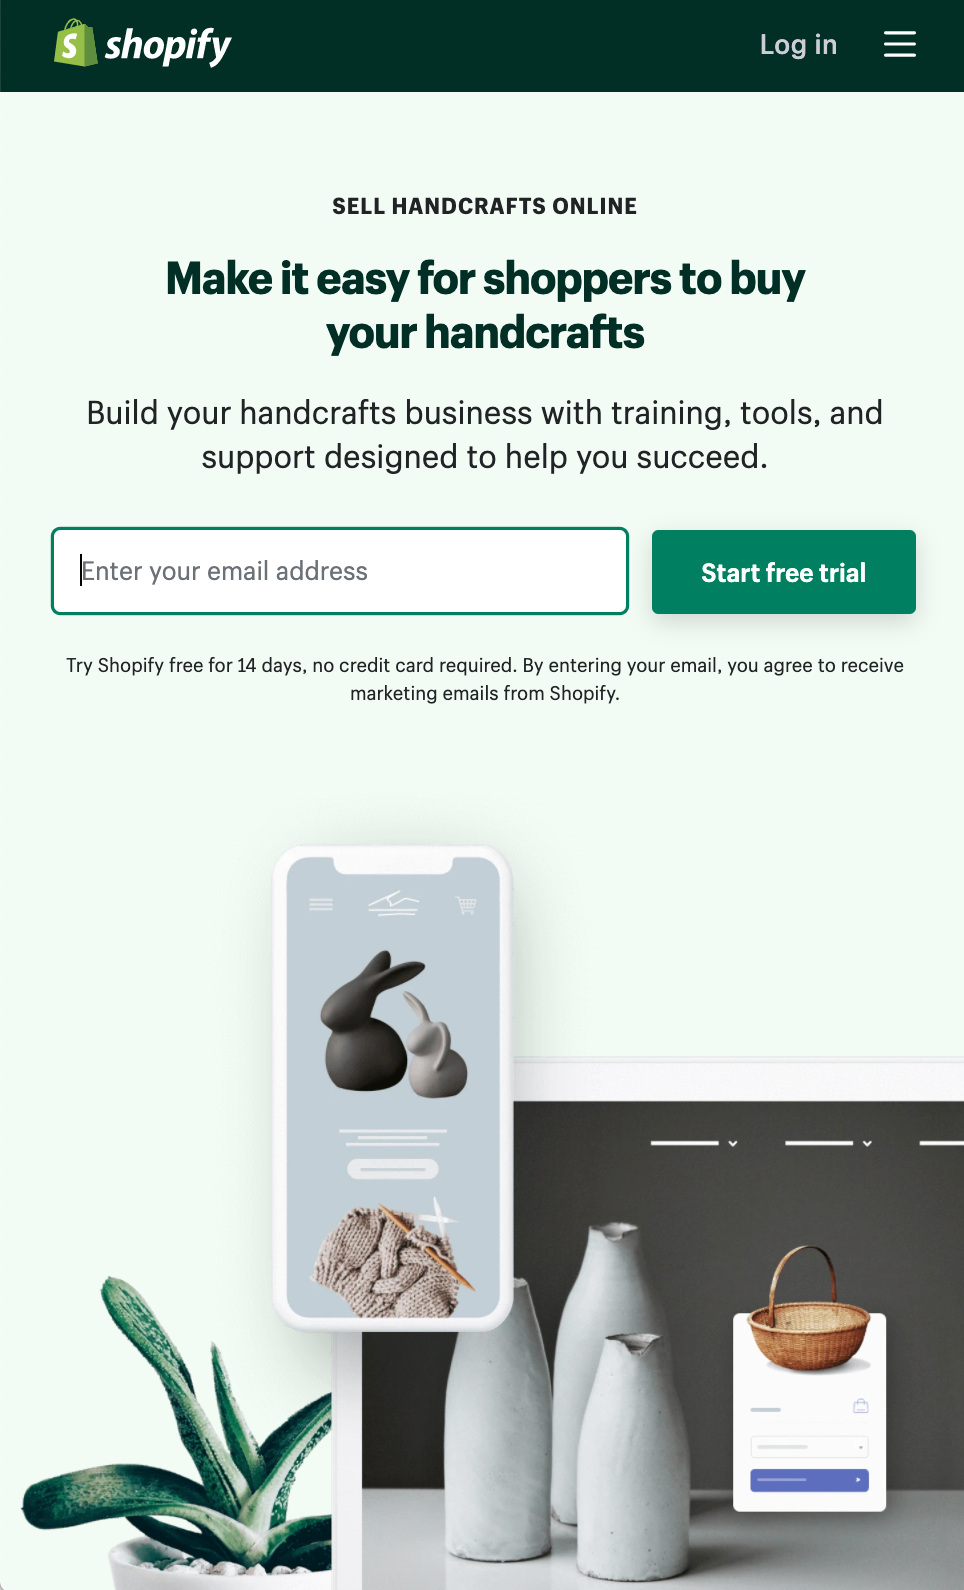  Small Business Ideas from Home: Shopify Handmade แนวคิดธุรกิจที่บ้าน  